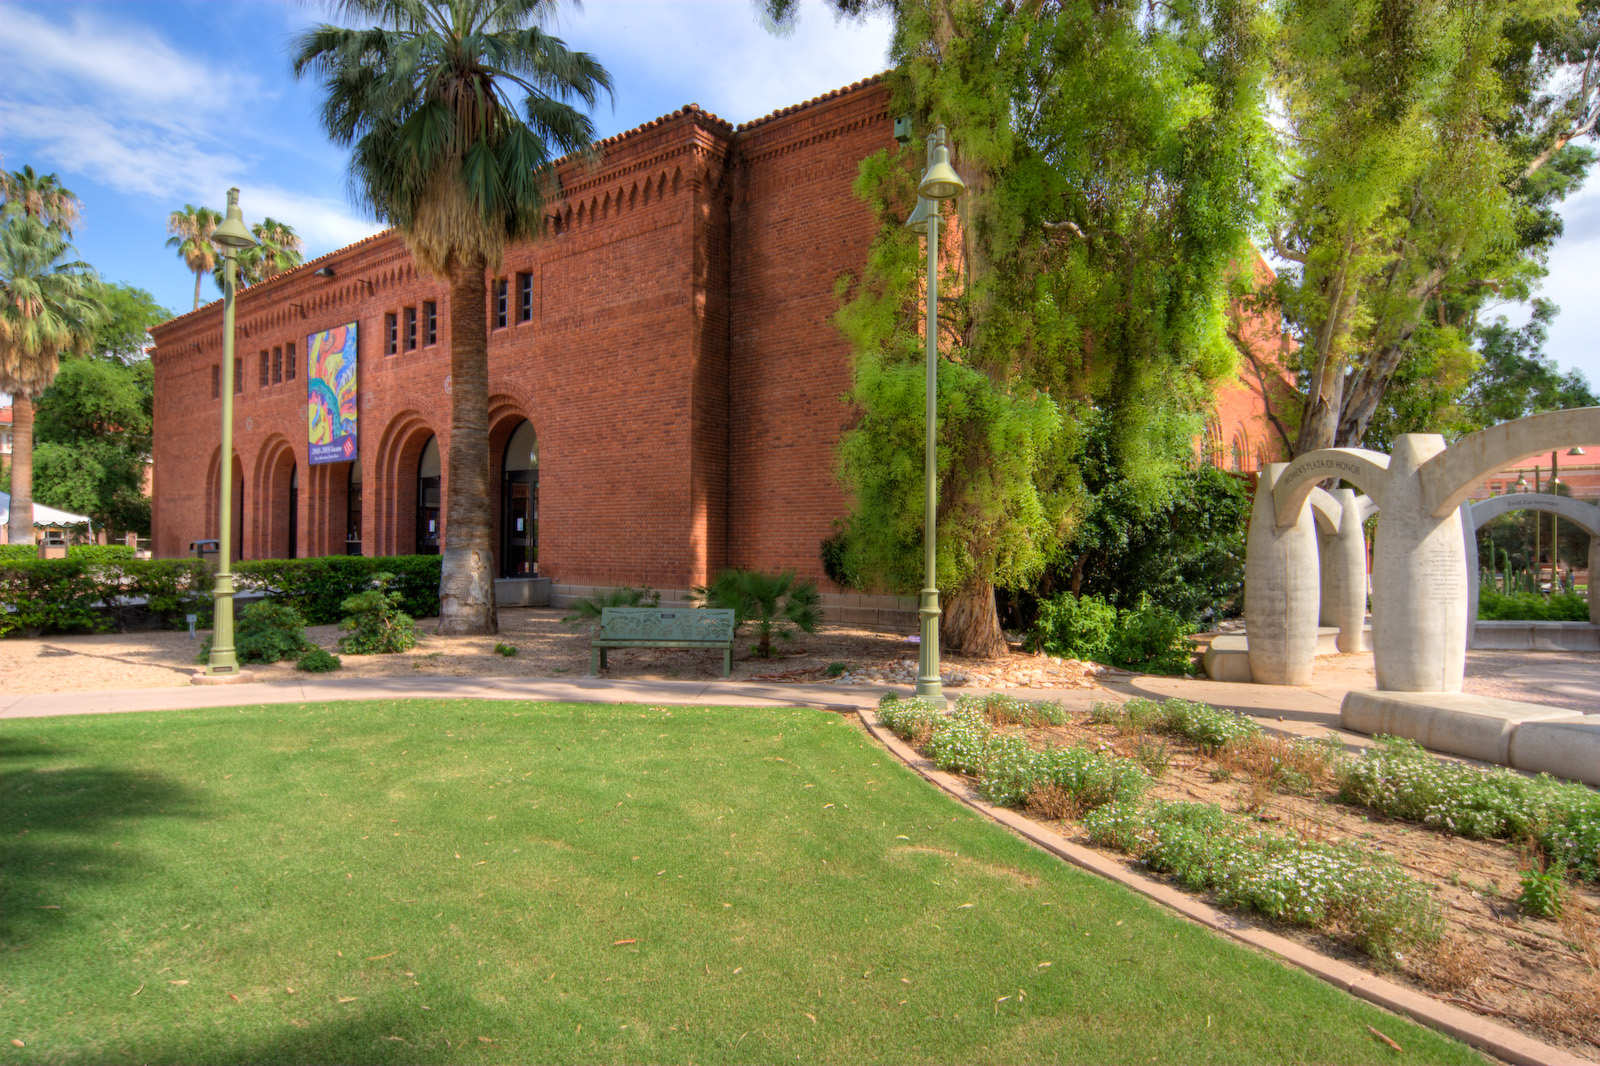 Centennial Hall (Credit: The University of Arizona)